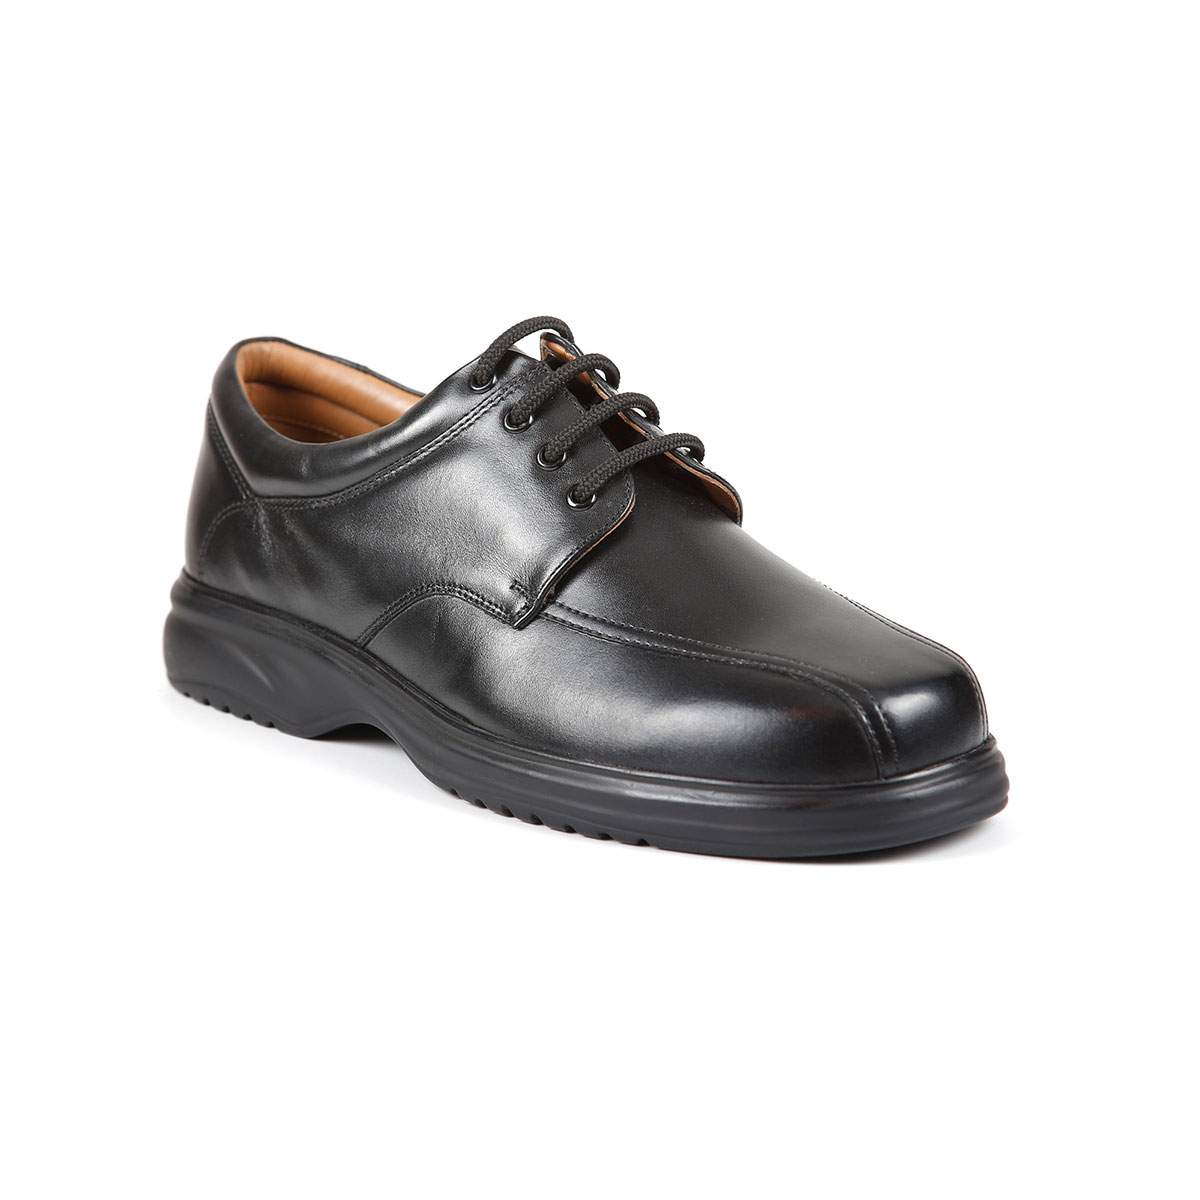 Black Paul shoe